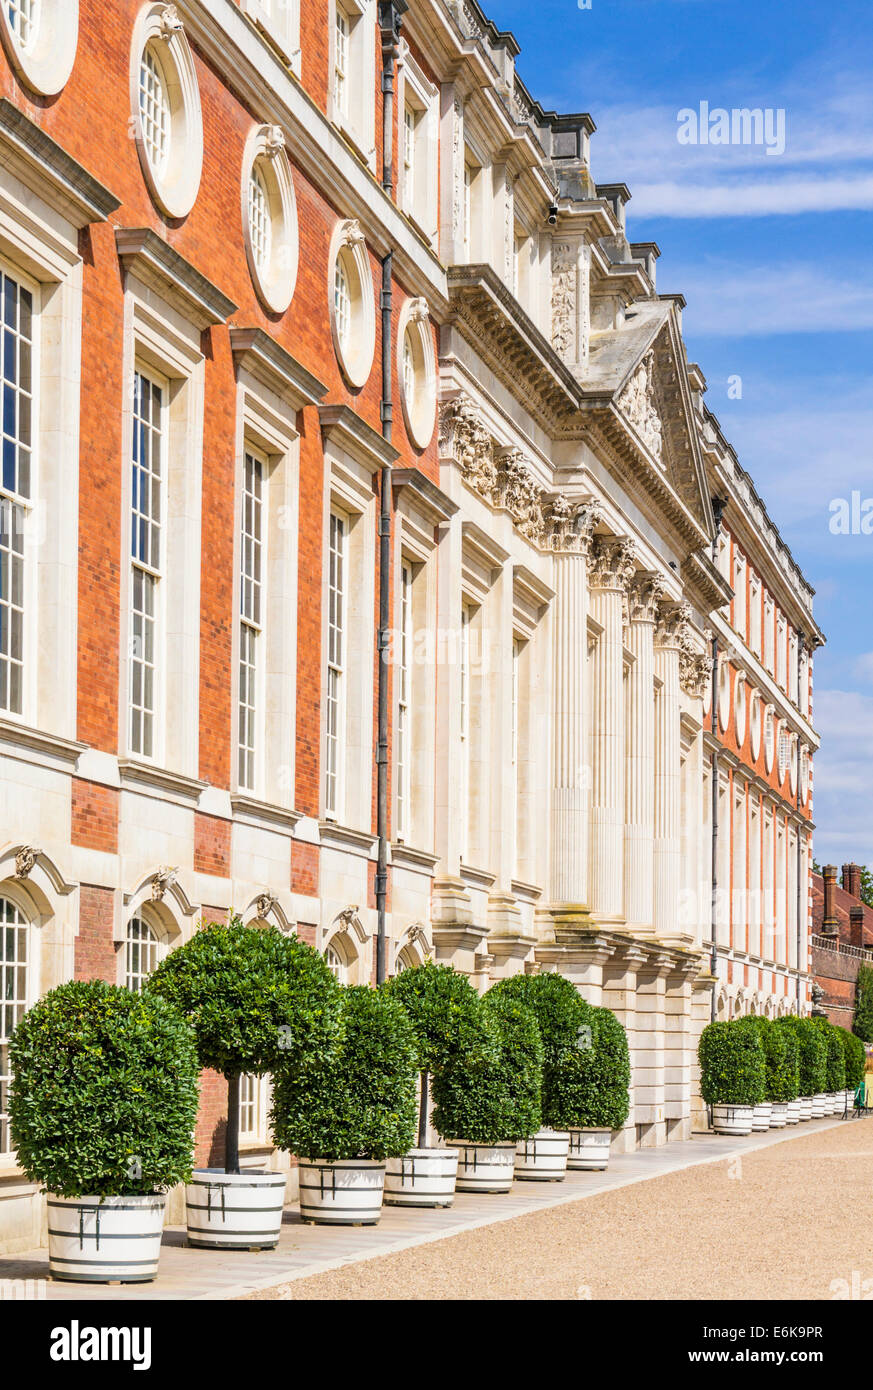 Hampton Court Palace vorderen London England UK GB EU Osteuropa Stockfoto